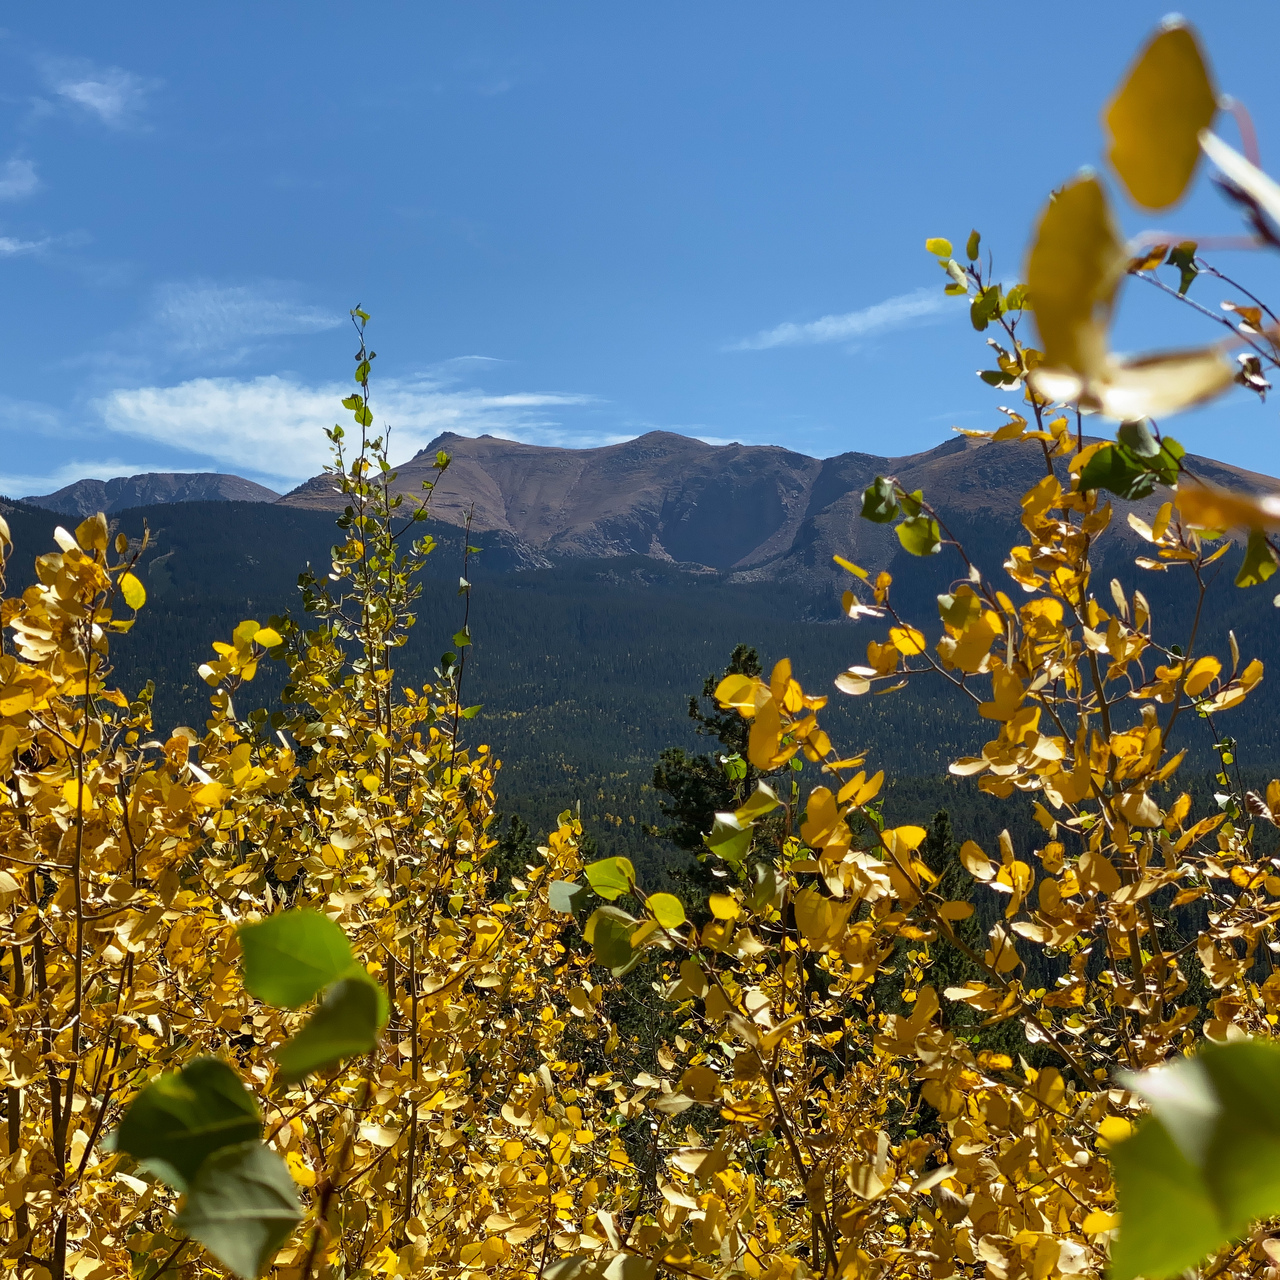 2019 - Catamount Trails near Pikes Peak, Colorado. October, 2019.